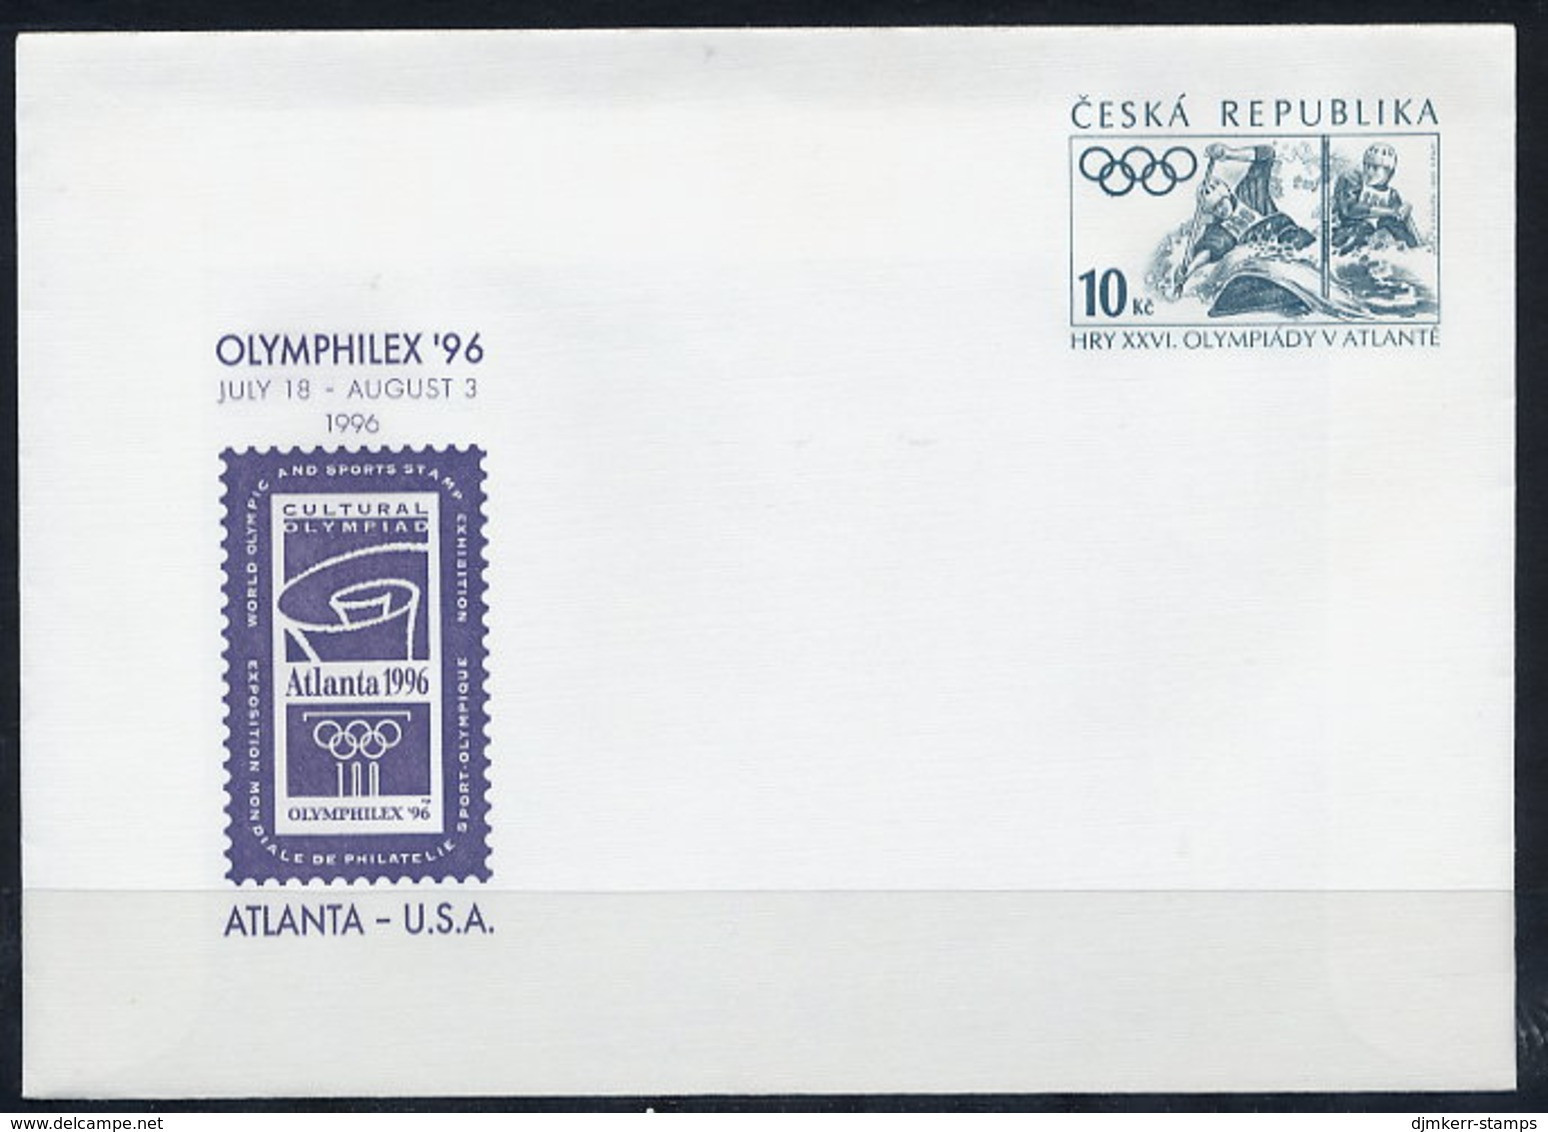 CZECH REPUBLIC 1996 10 Kc Envelope OLYMPHILEX '96 Unused.  Michel U3 - Sobres